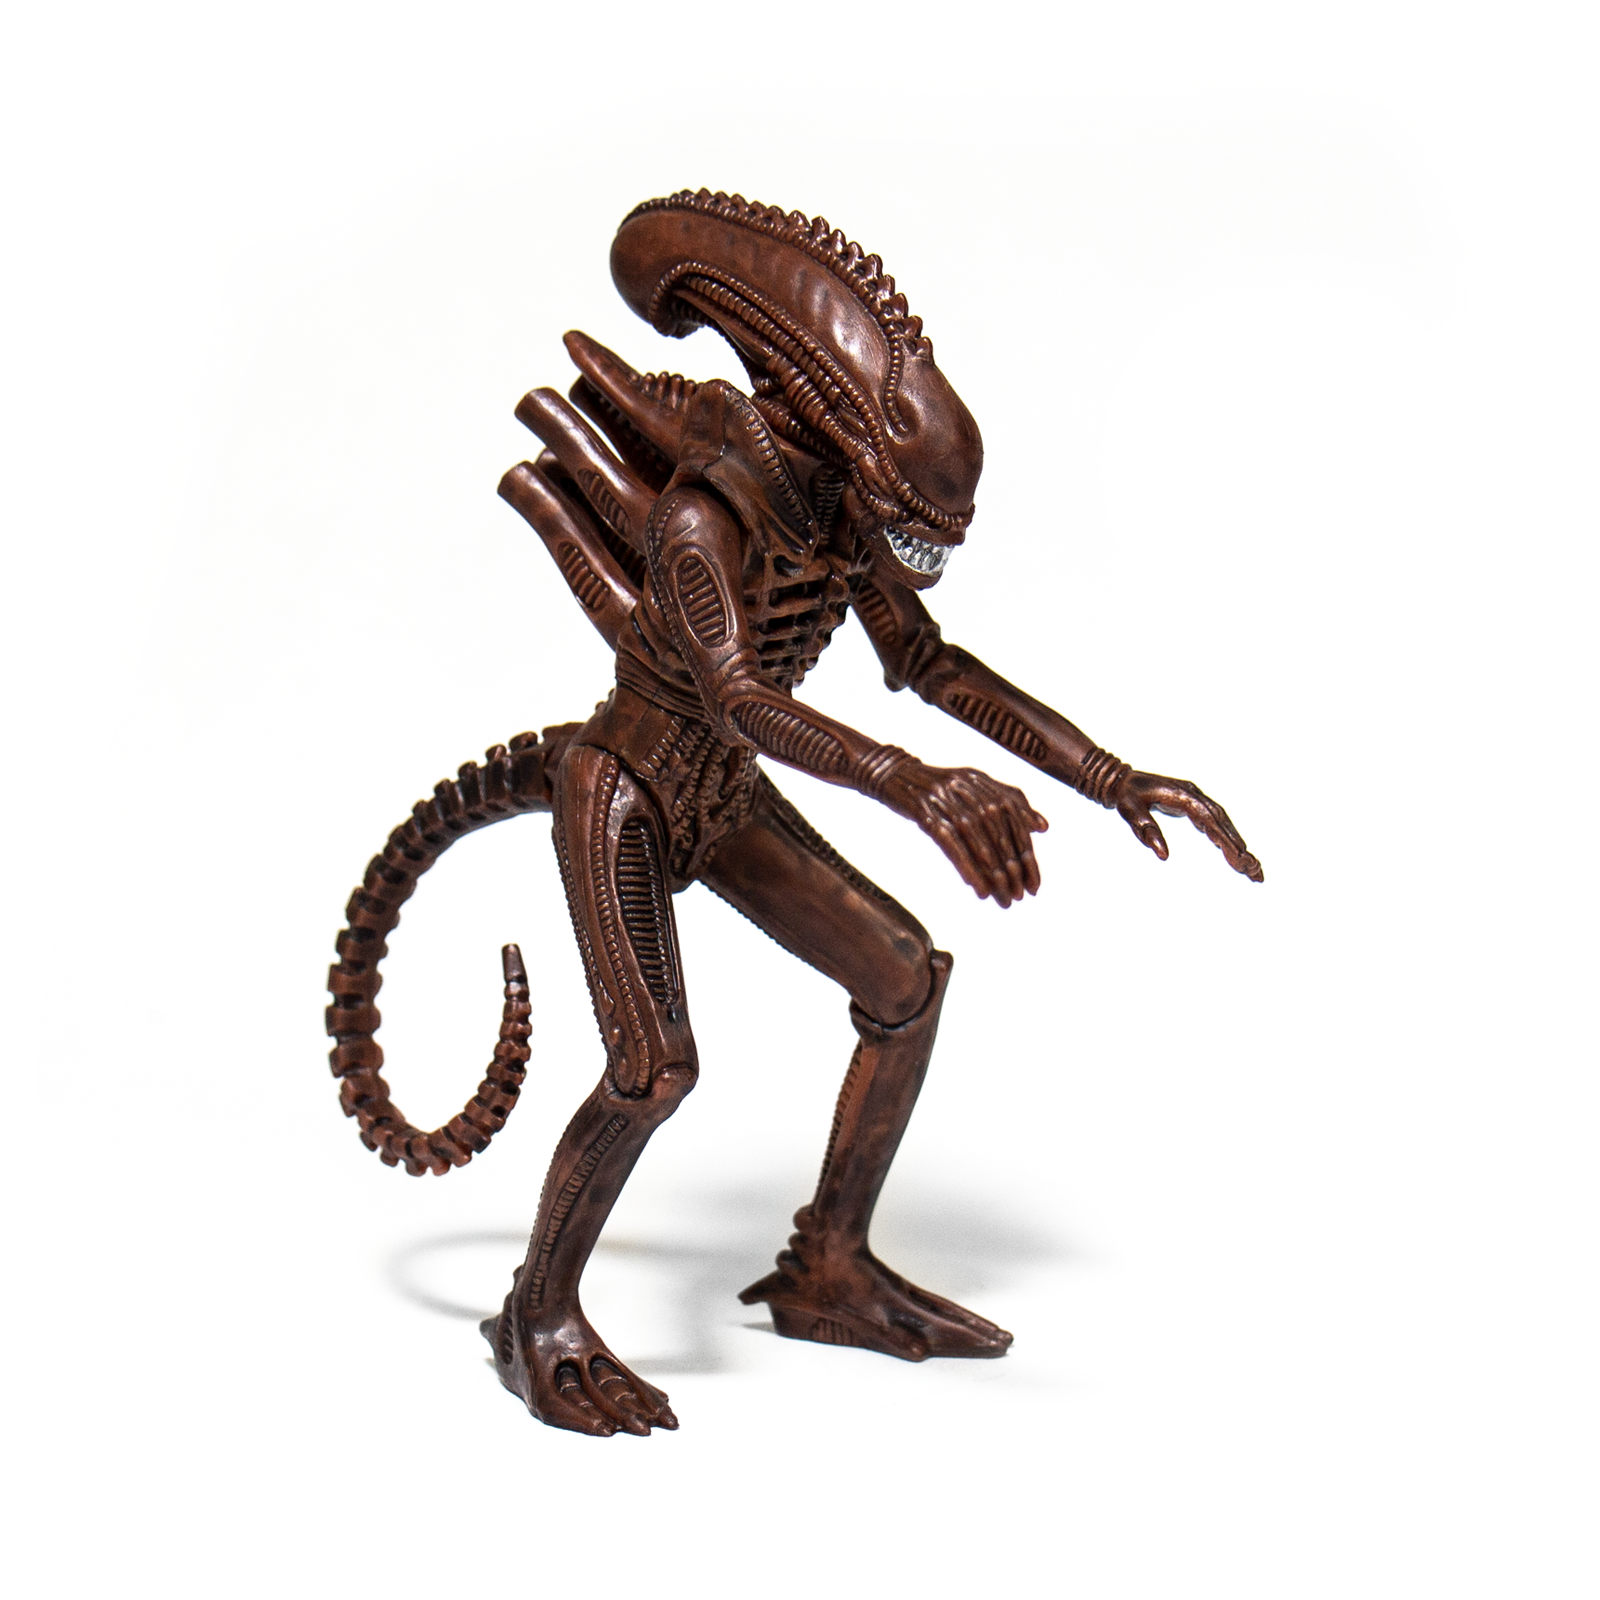 Aliens ReAction Figure - Alien Warrior B (Dusk Brown) - Zlc Collectibles